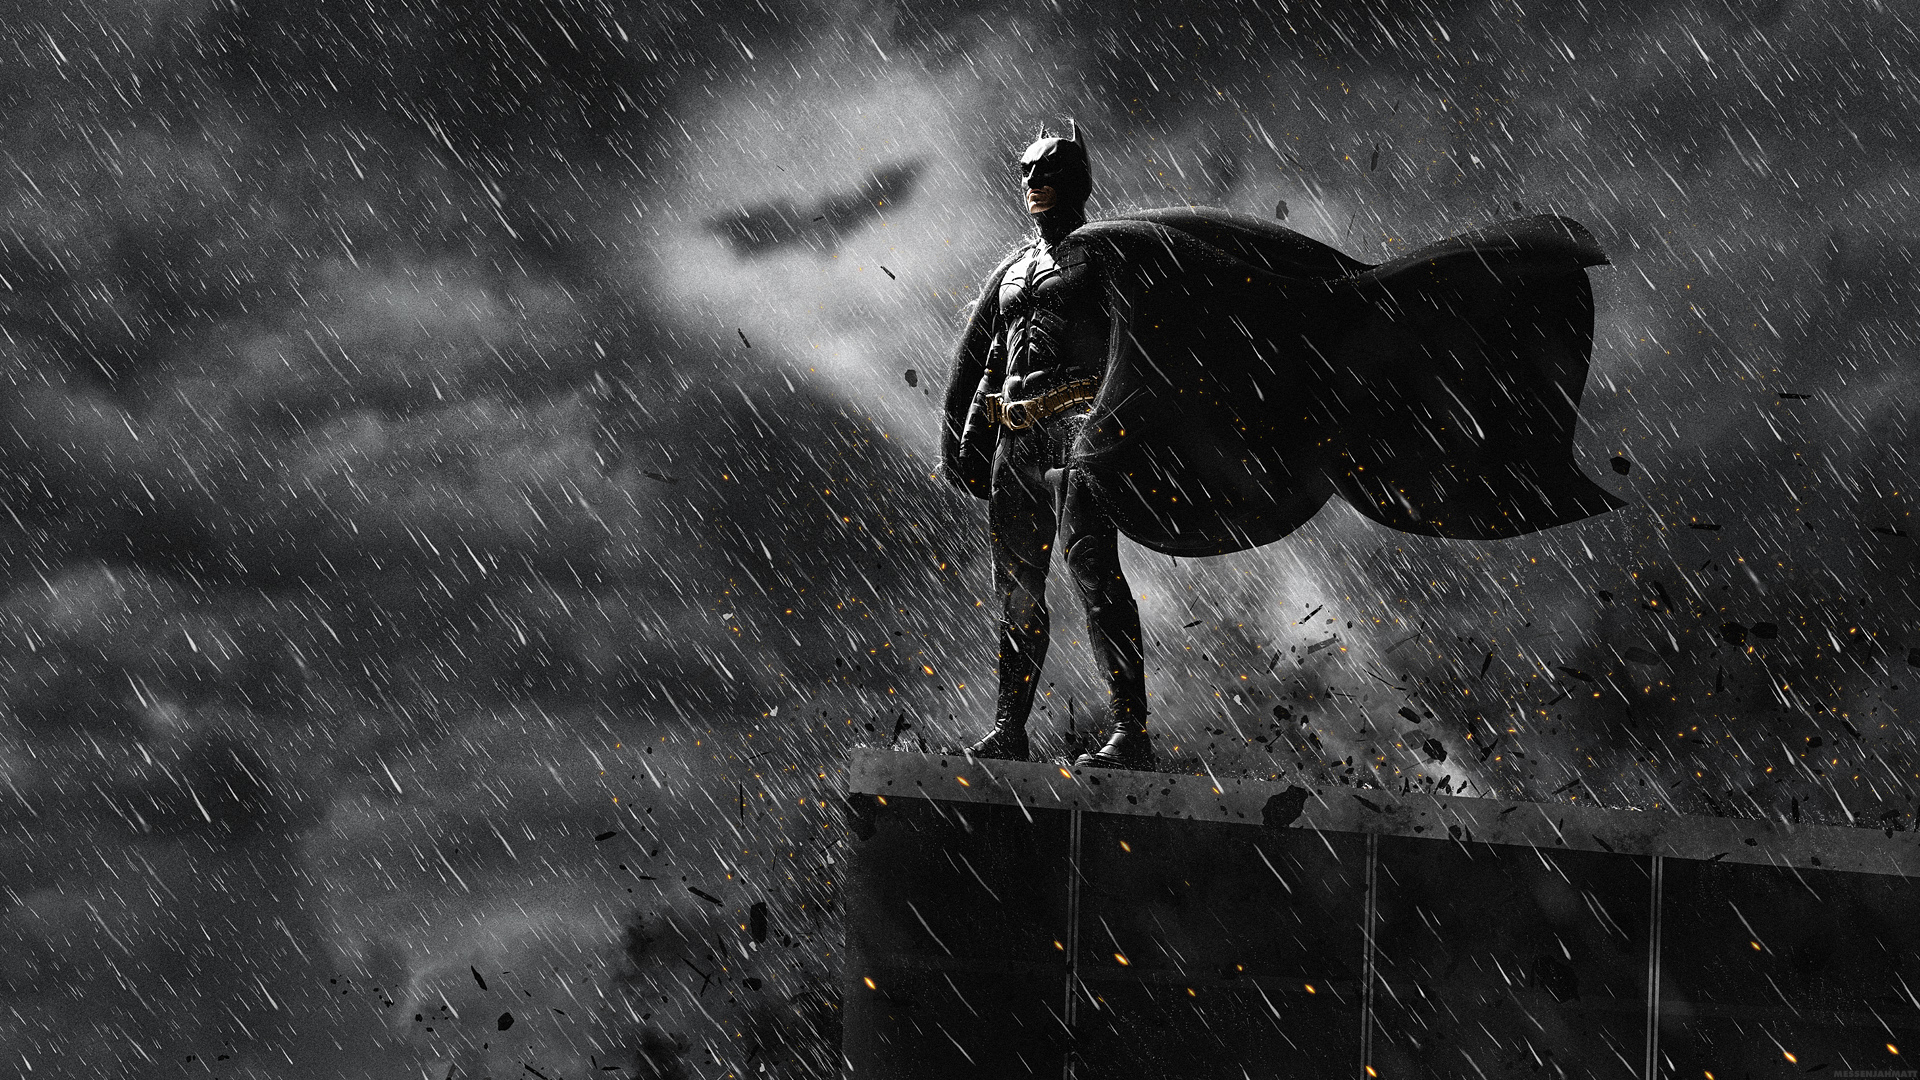 Movie Wallpaper: Batman The Dark Knight Rises 3d Wallpapers Images ...